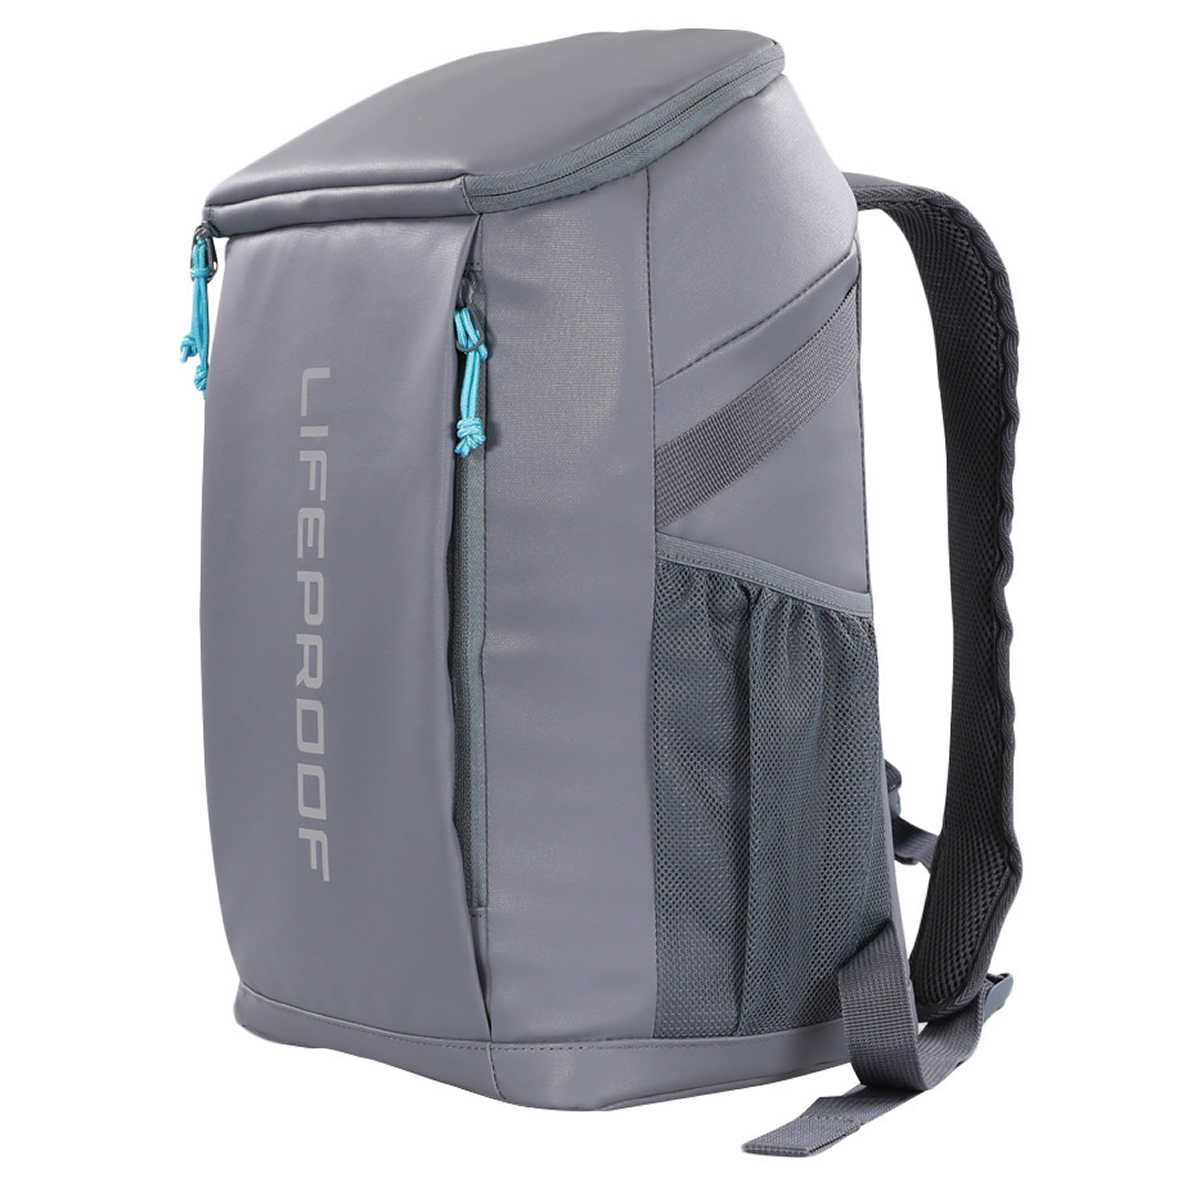 LifeProof Backpack Cooler